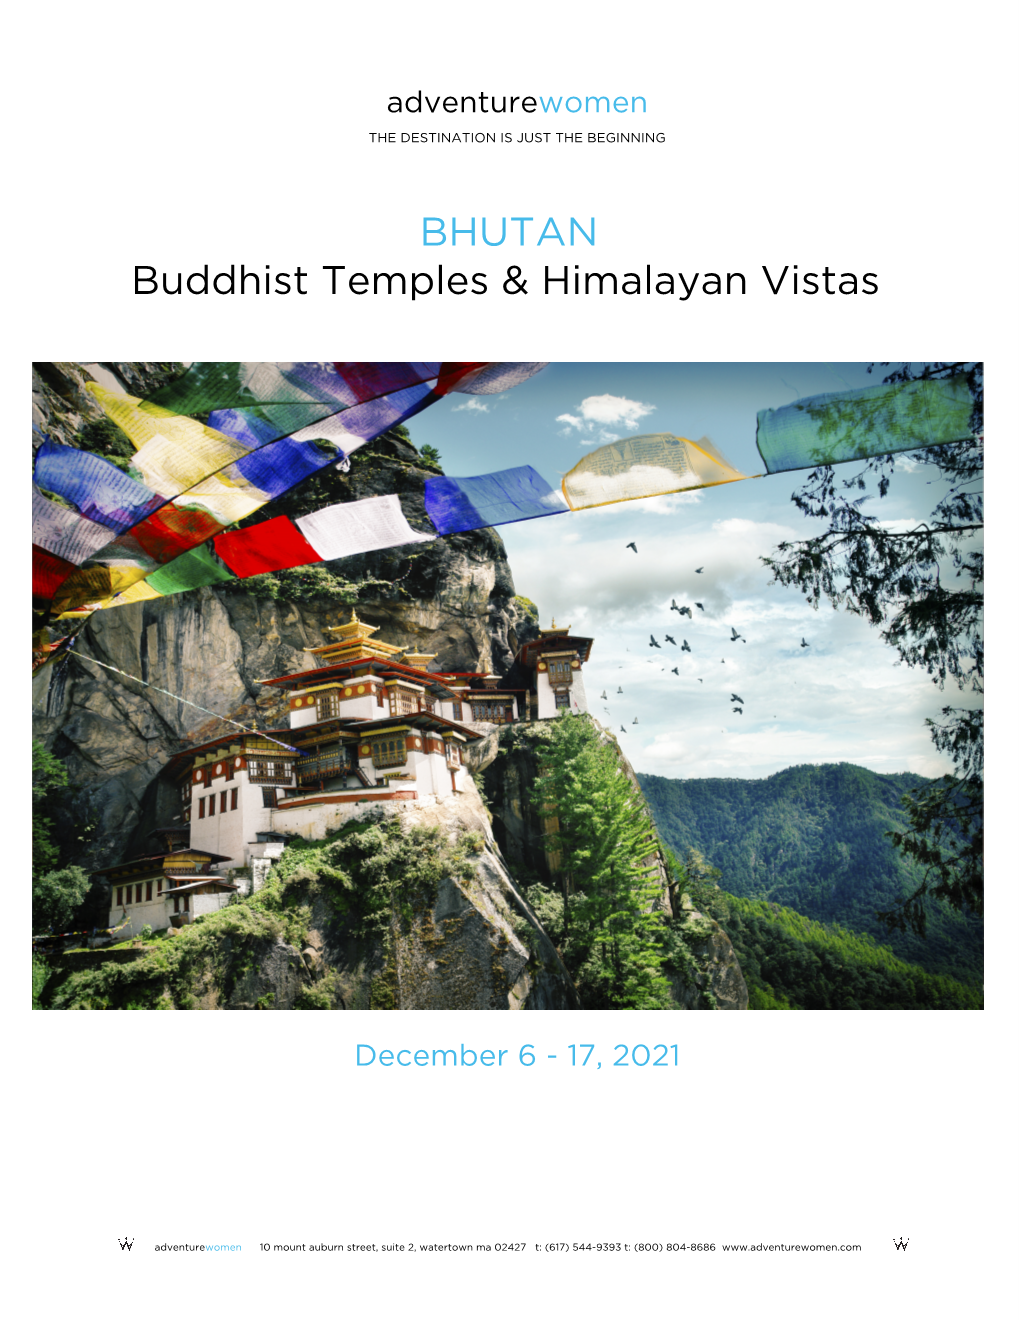 BHUTAN Buddhist Temples & Himalayan Vistas